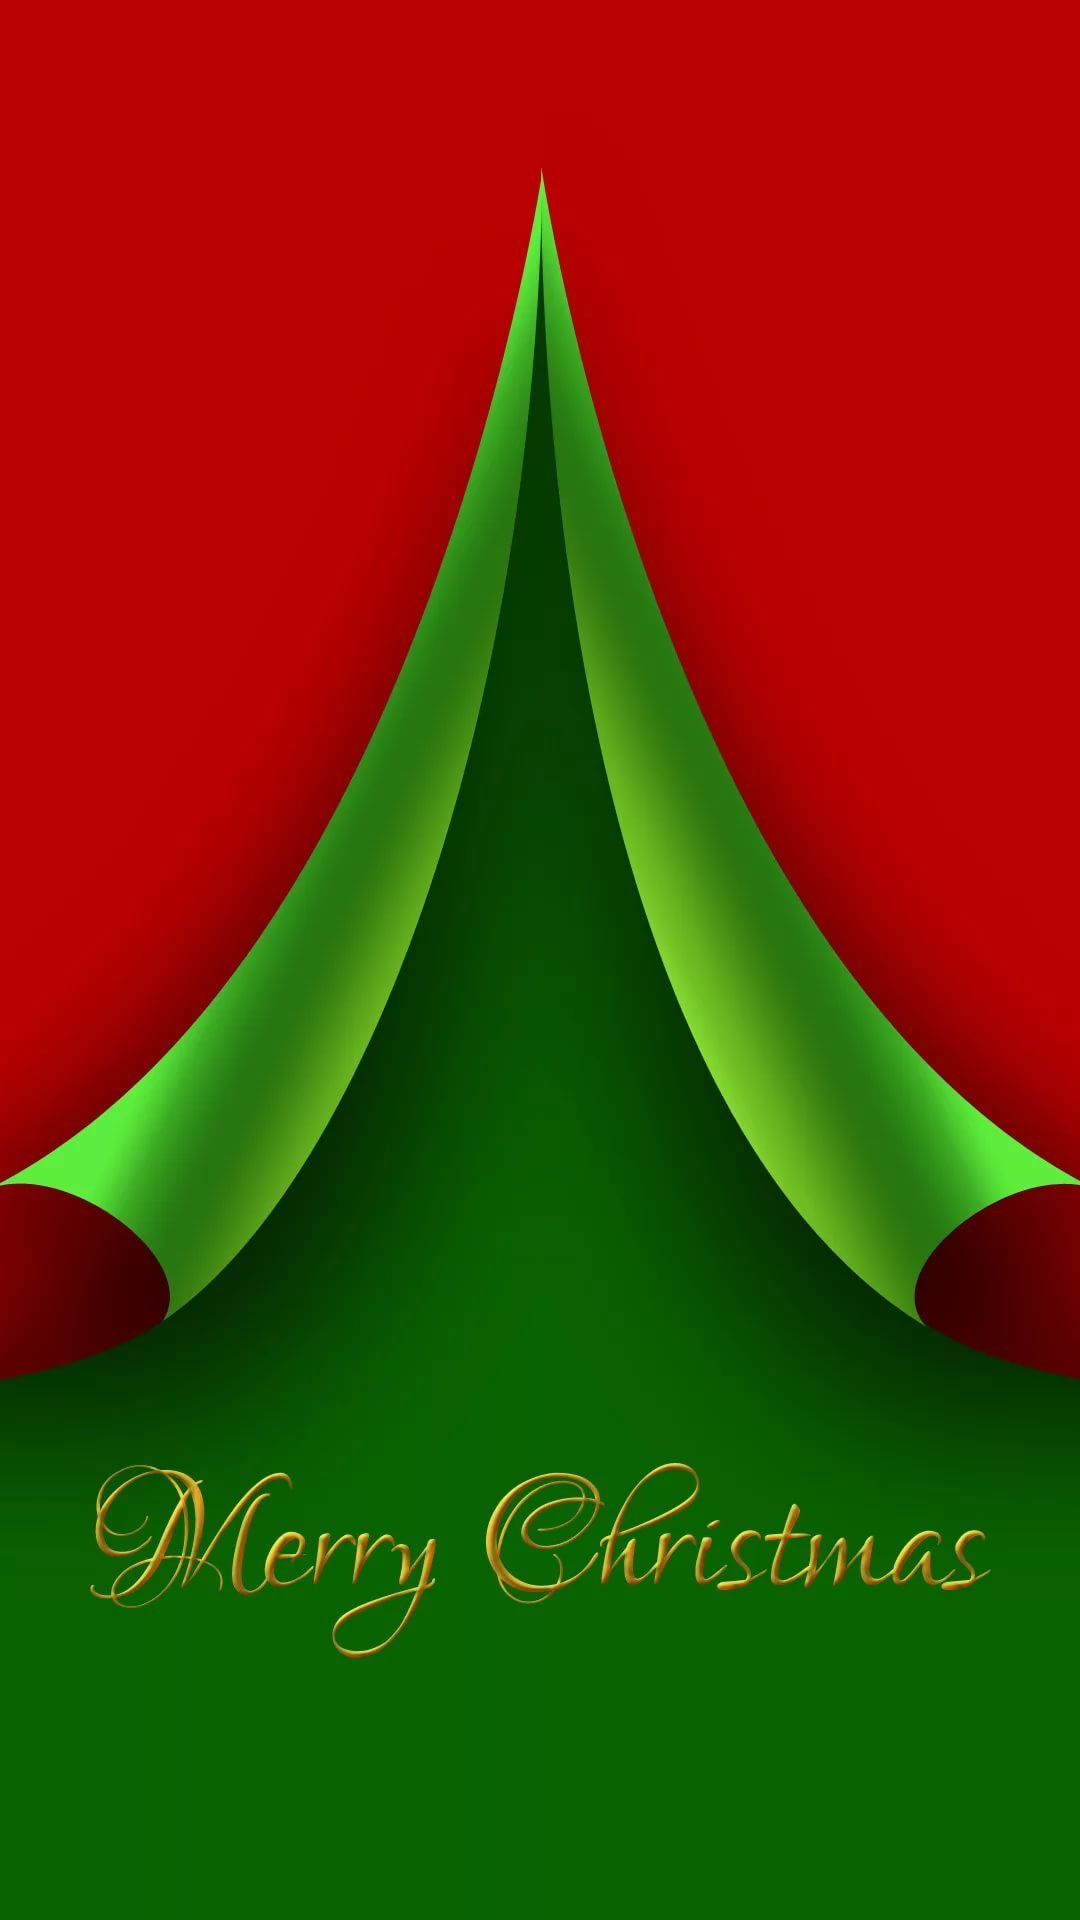 Free Christmas iPhone Wallpaper